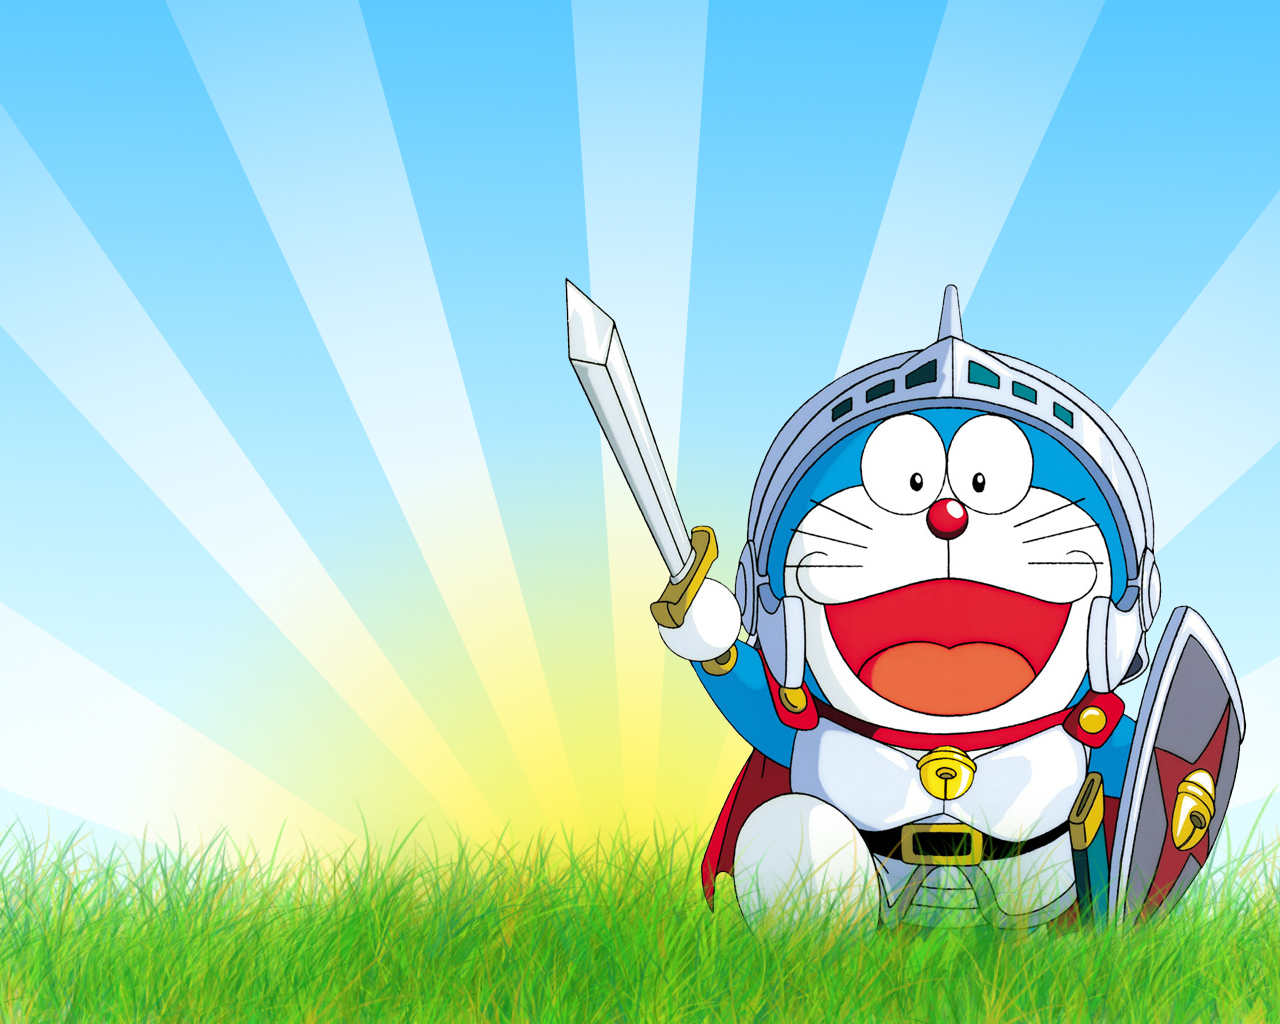 Doraemon Wallpaper Studio Mayapada